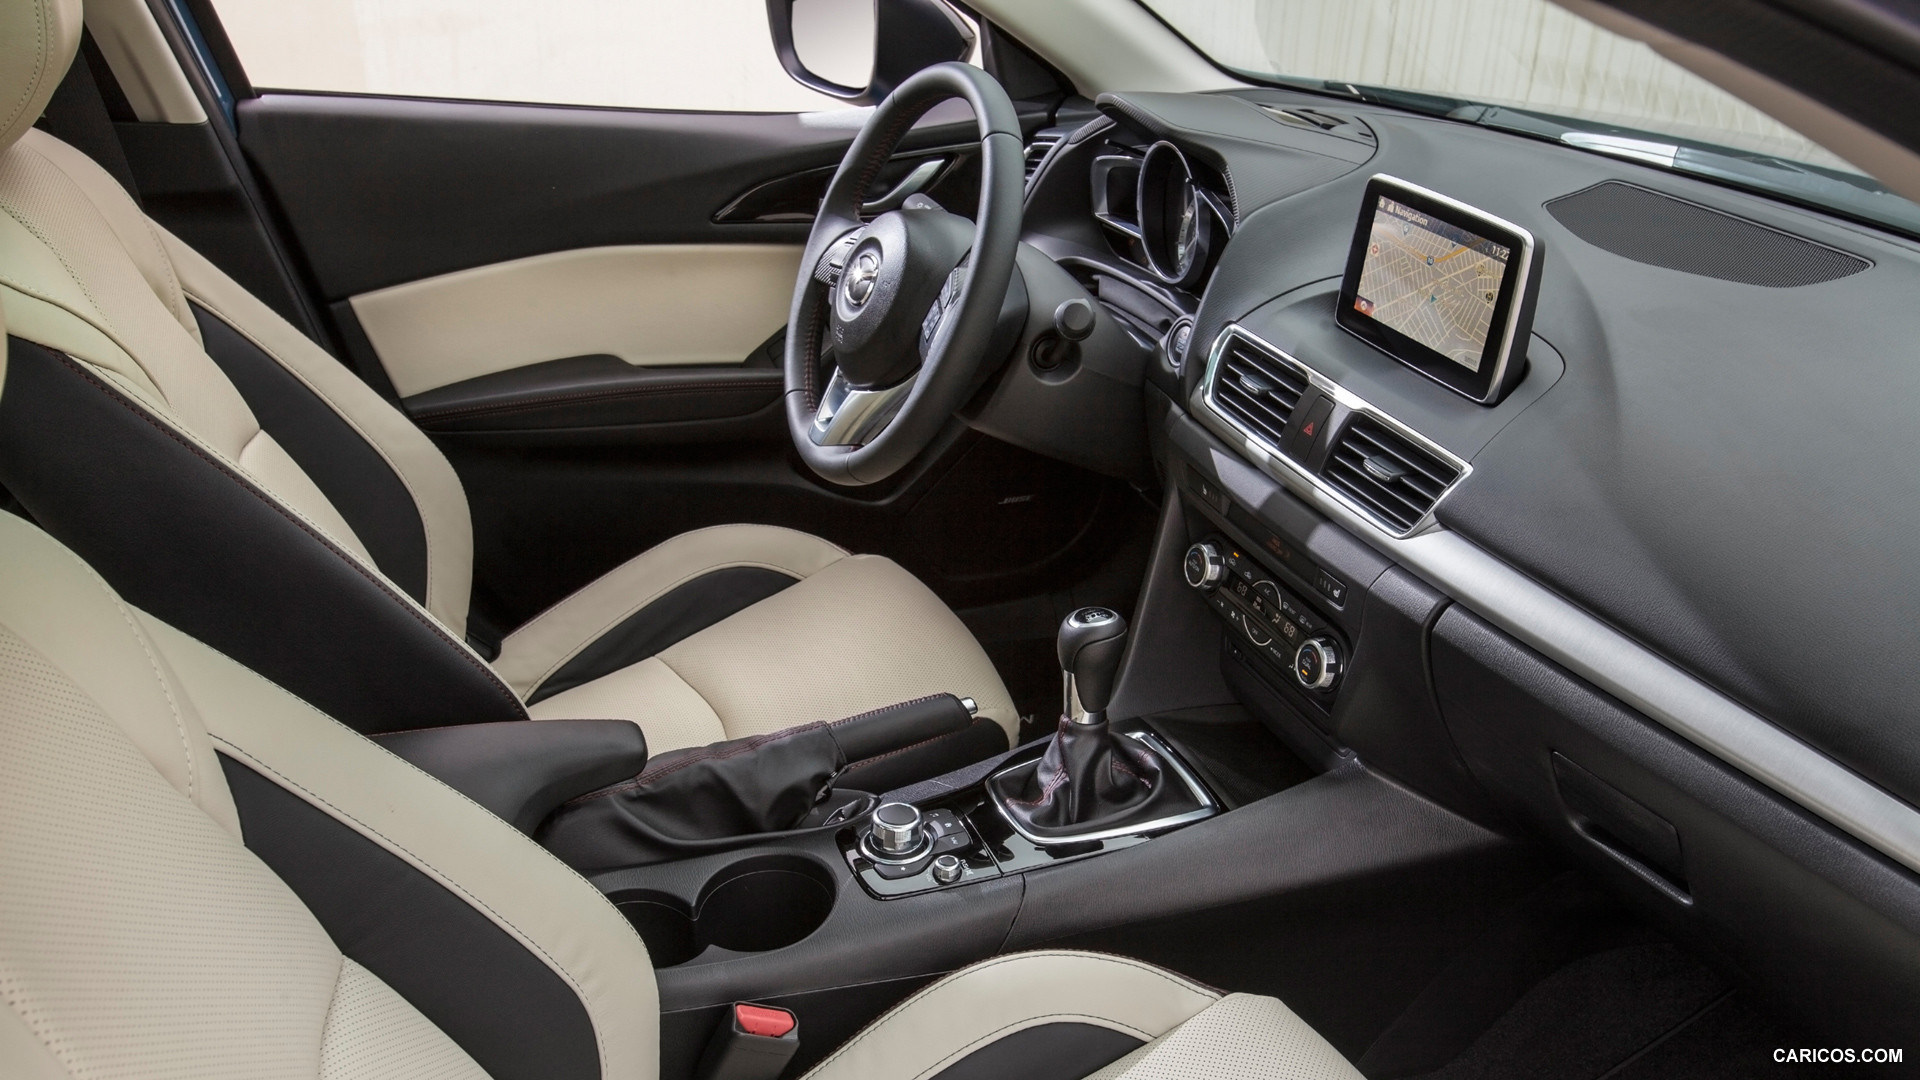 2015 Mazda 3 5D s Touring 6MT (Blue Reflex)  - Interior, #25 of 27